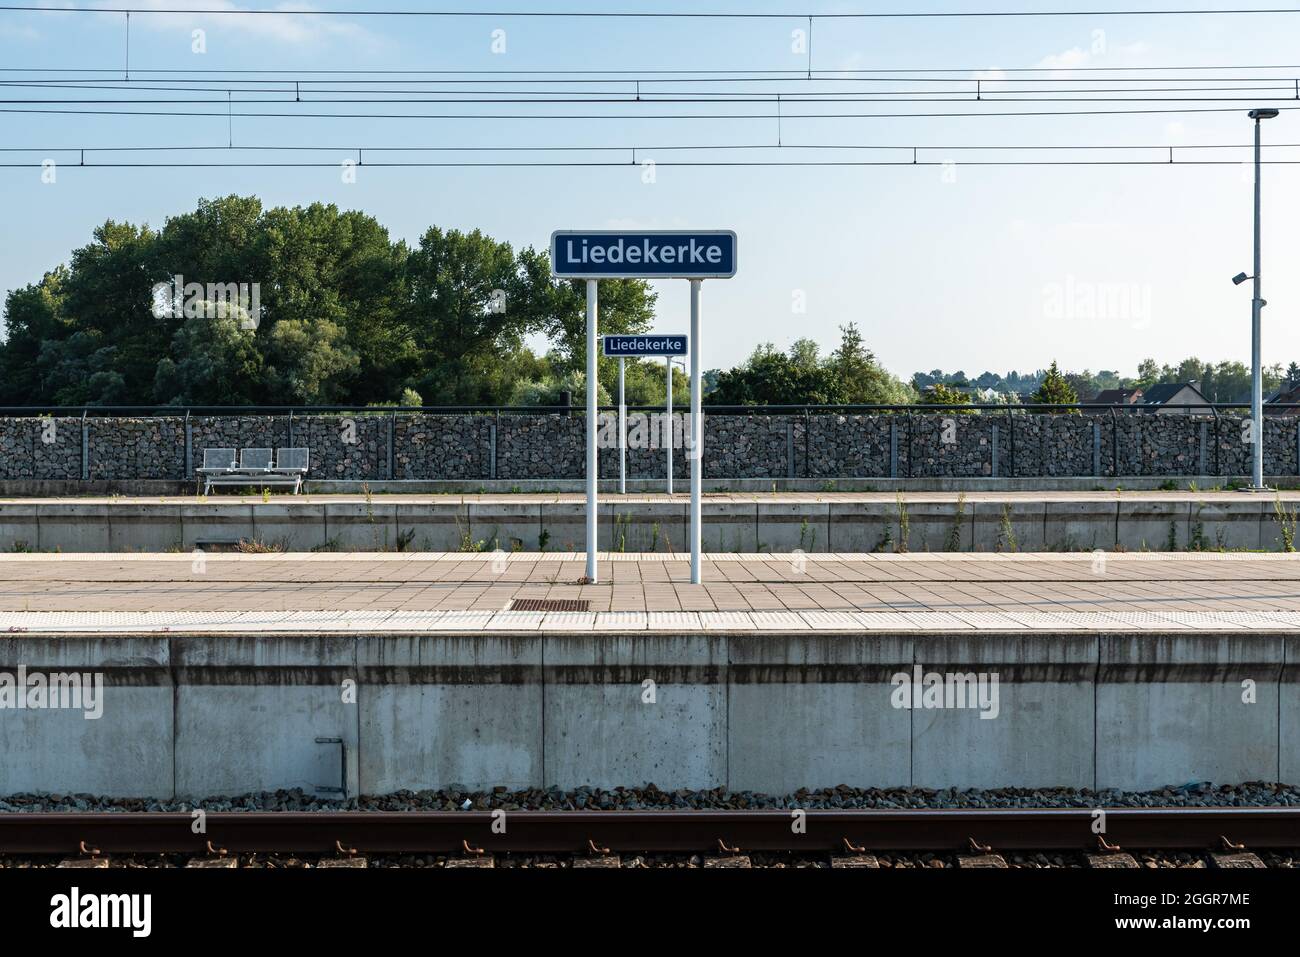 Railway, platform and tracks of the local Liedekerke trainstation Stock Photo